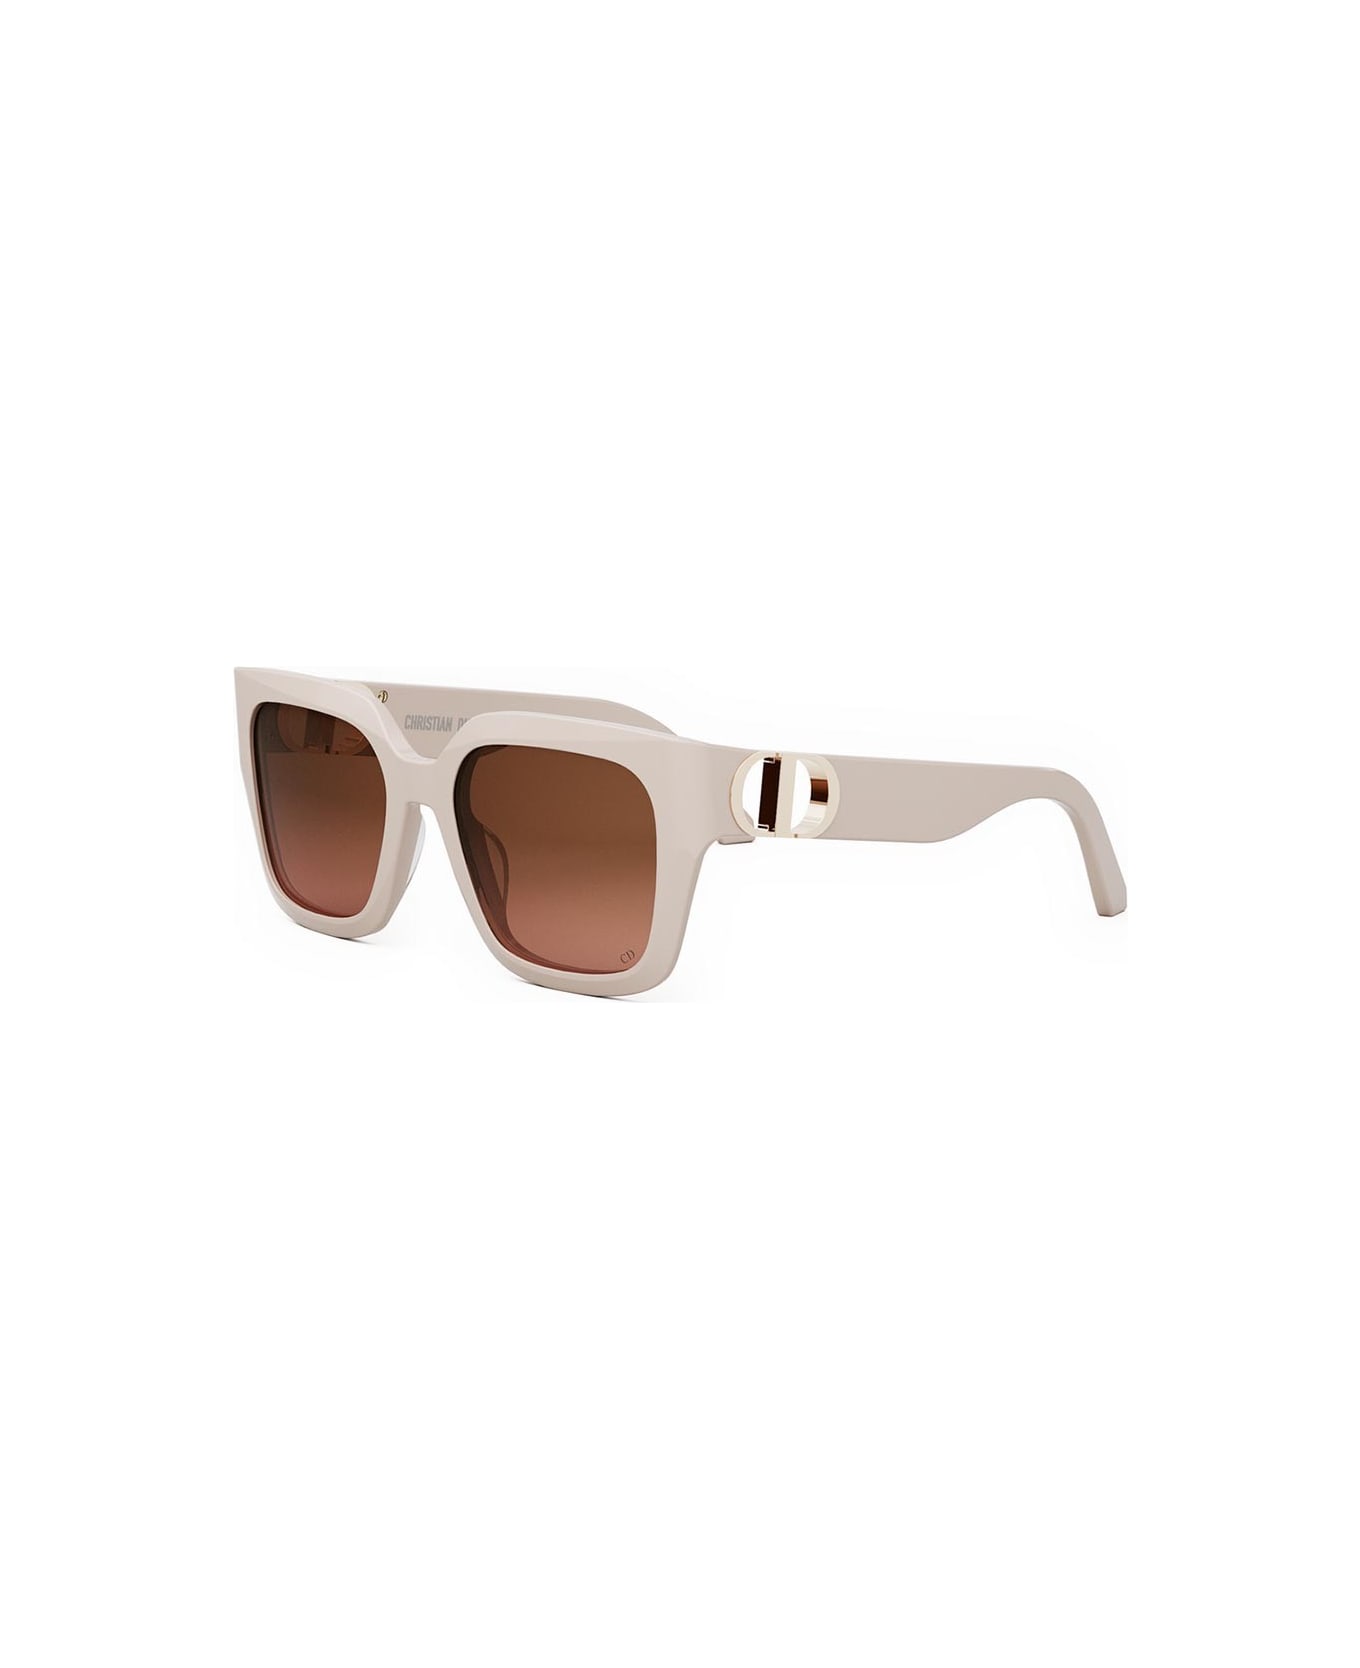 Dior Eyewear Sunglasses - Cipria/Marrone